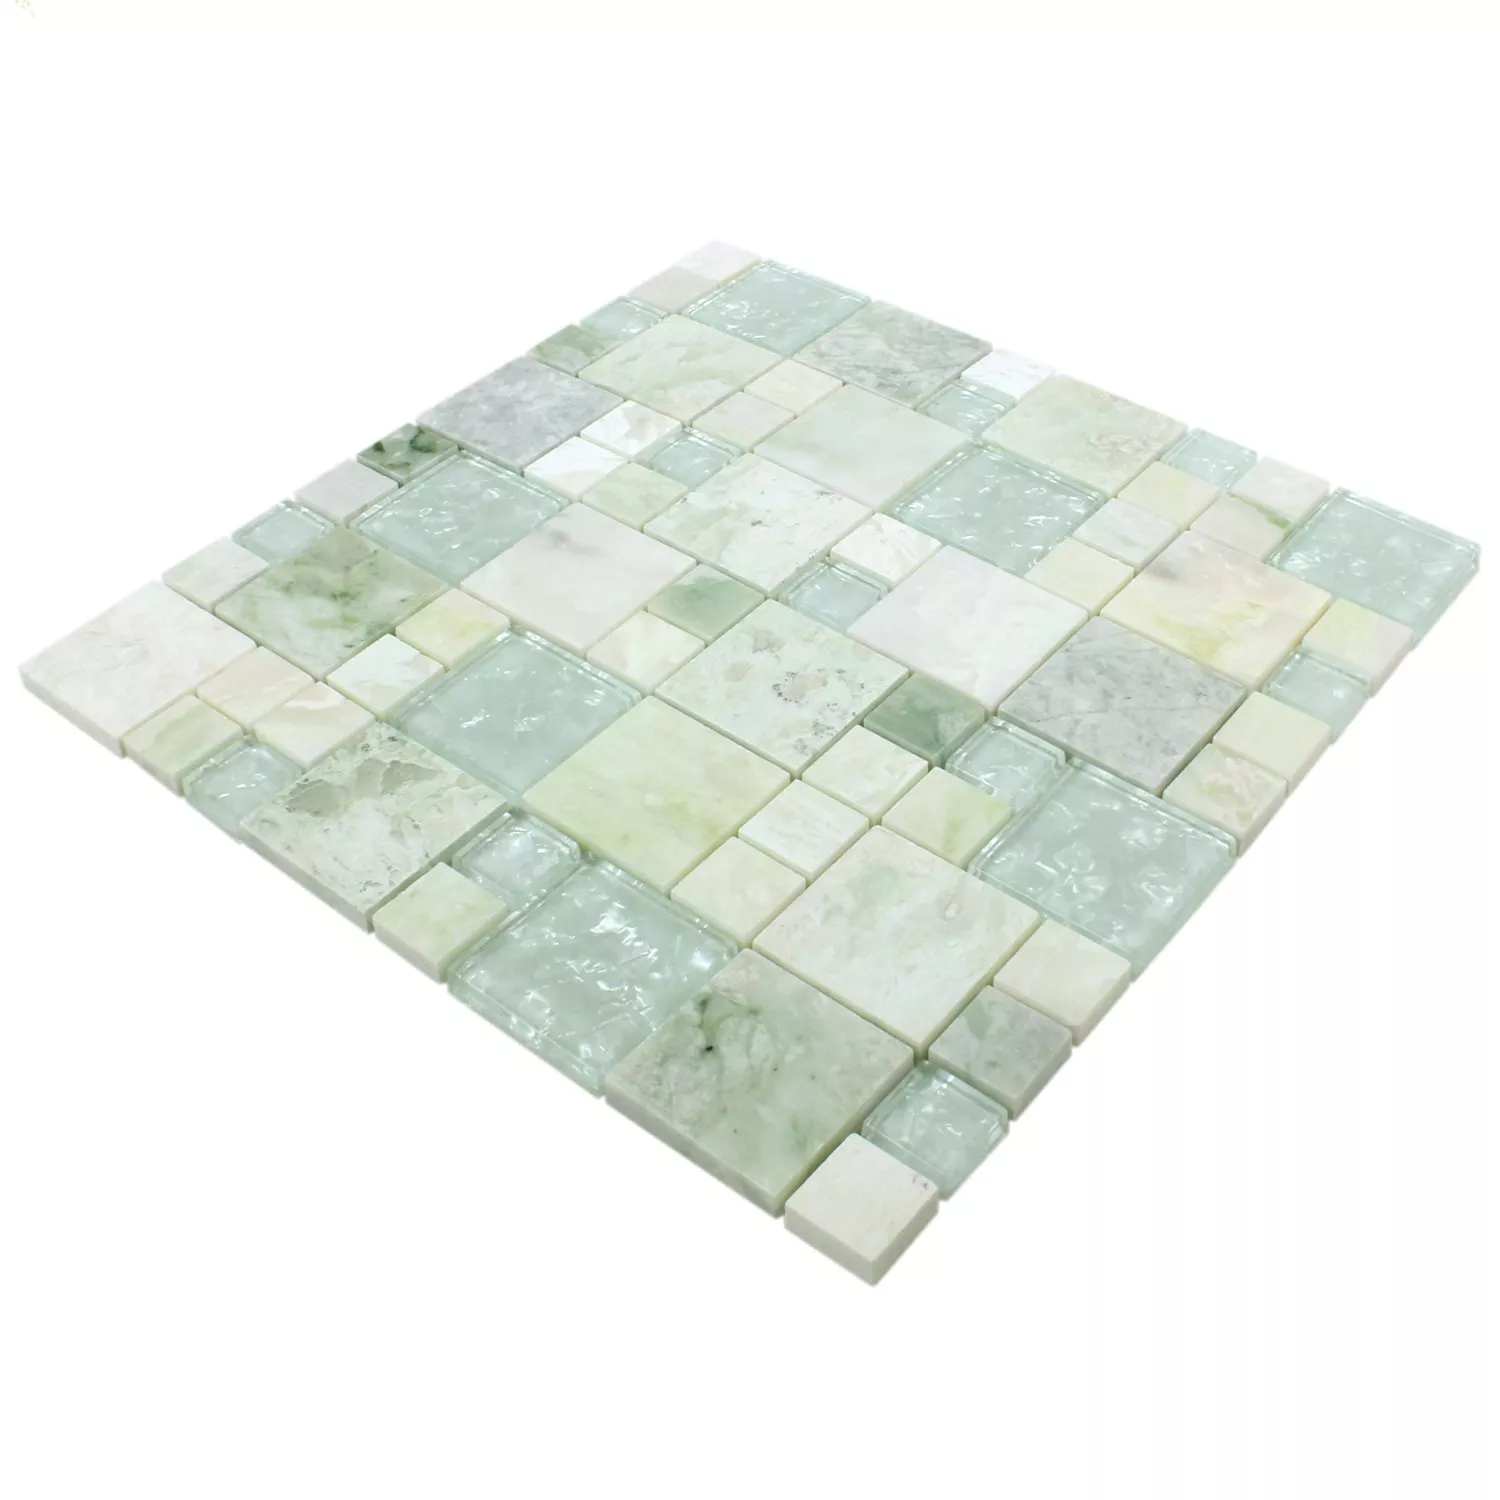 Sample Mosaic Tiles Onyx Larinera Green Gold Mix